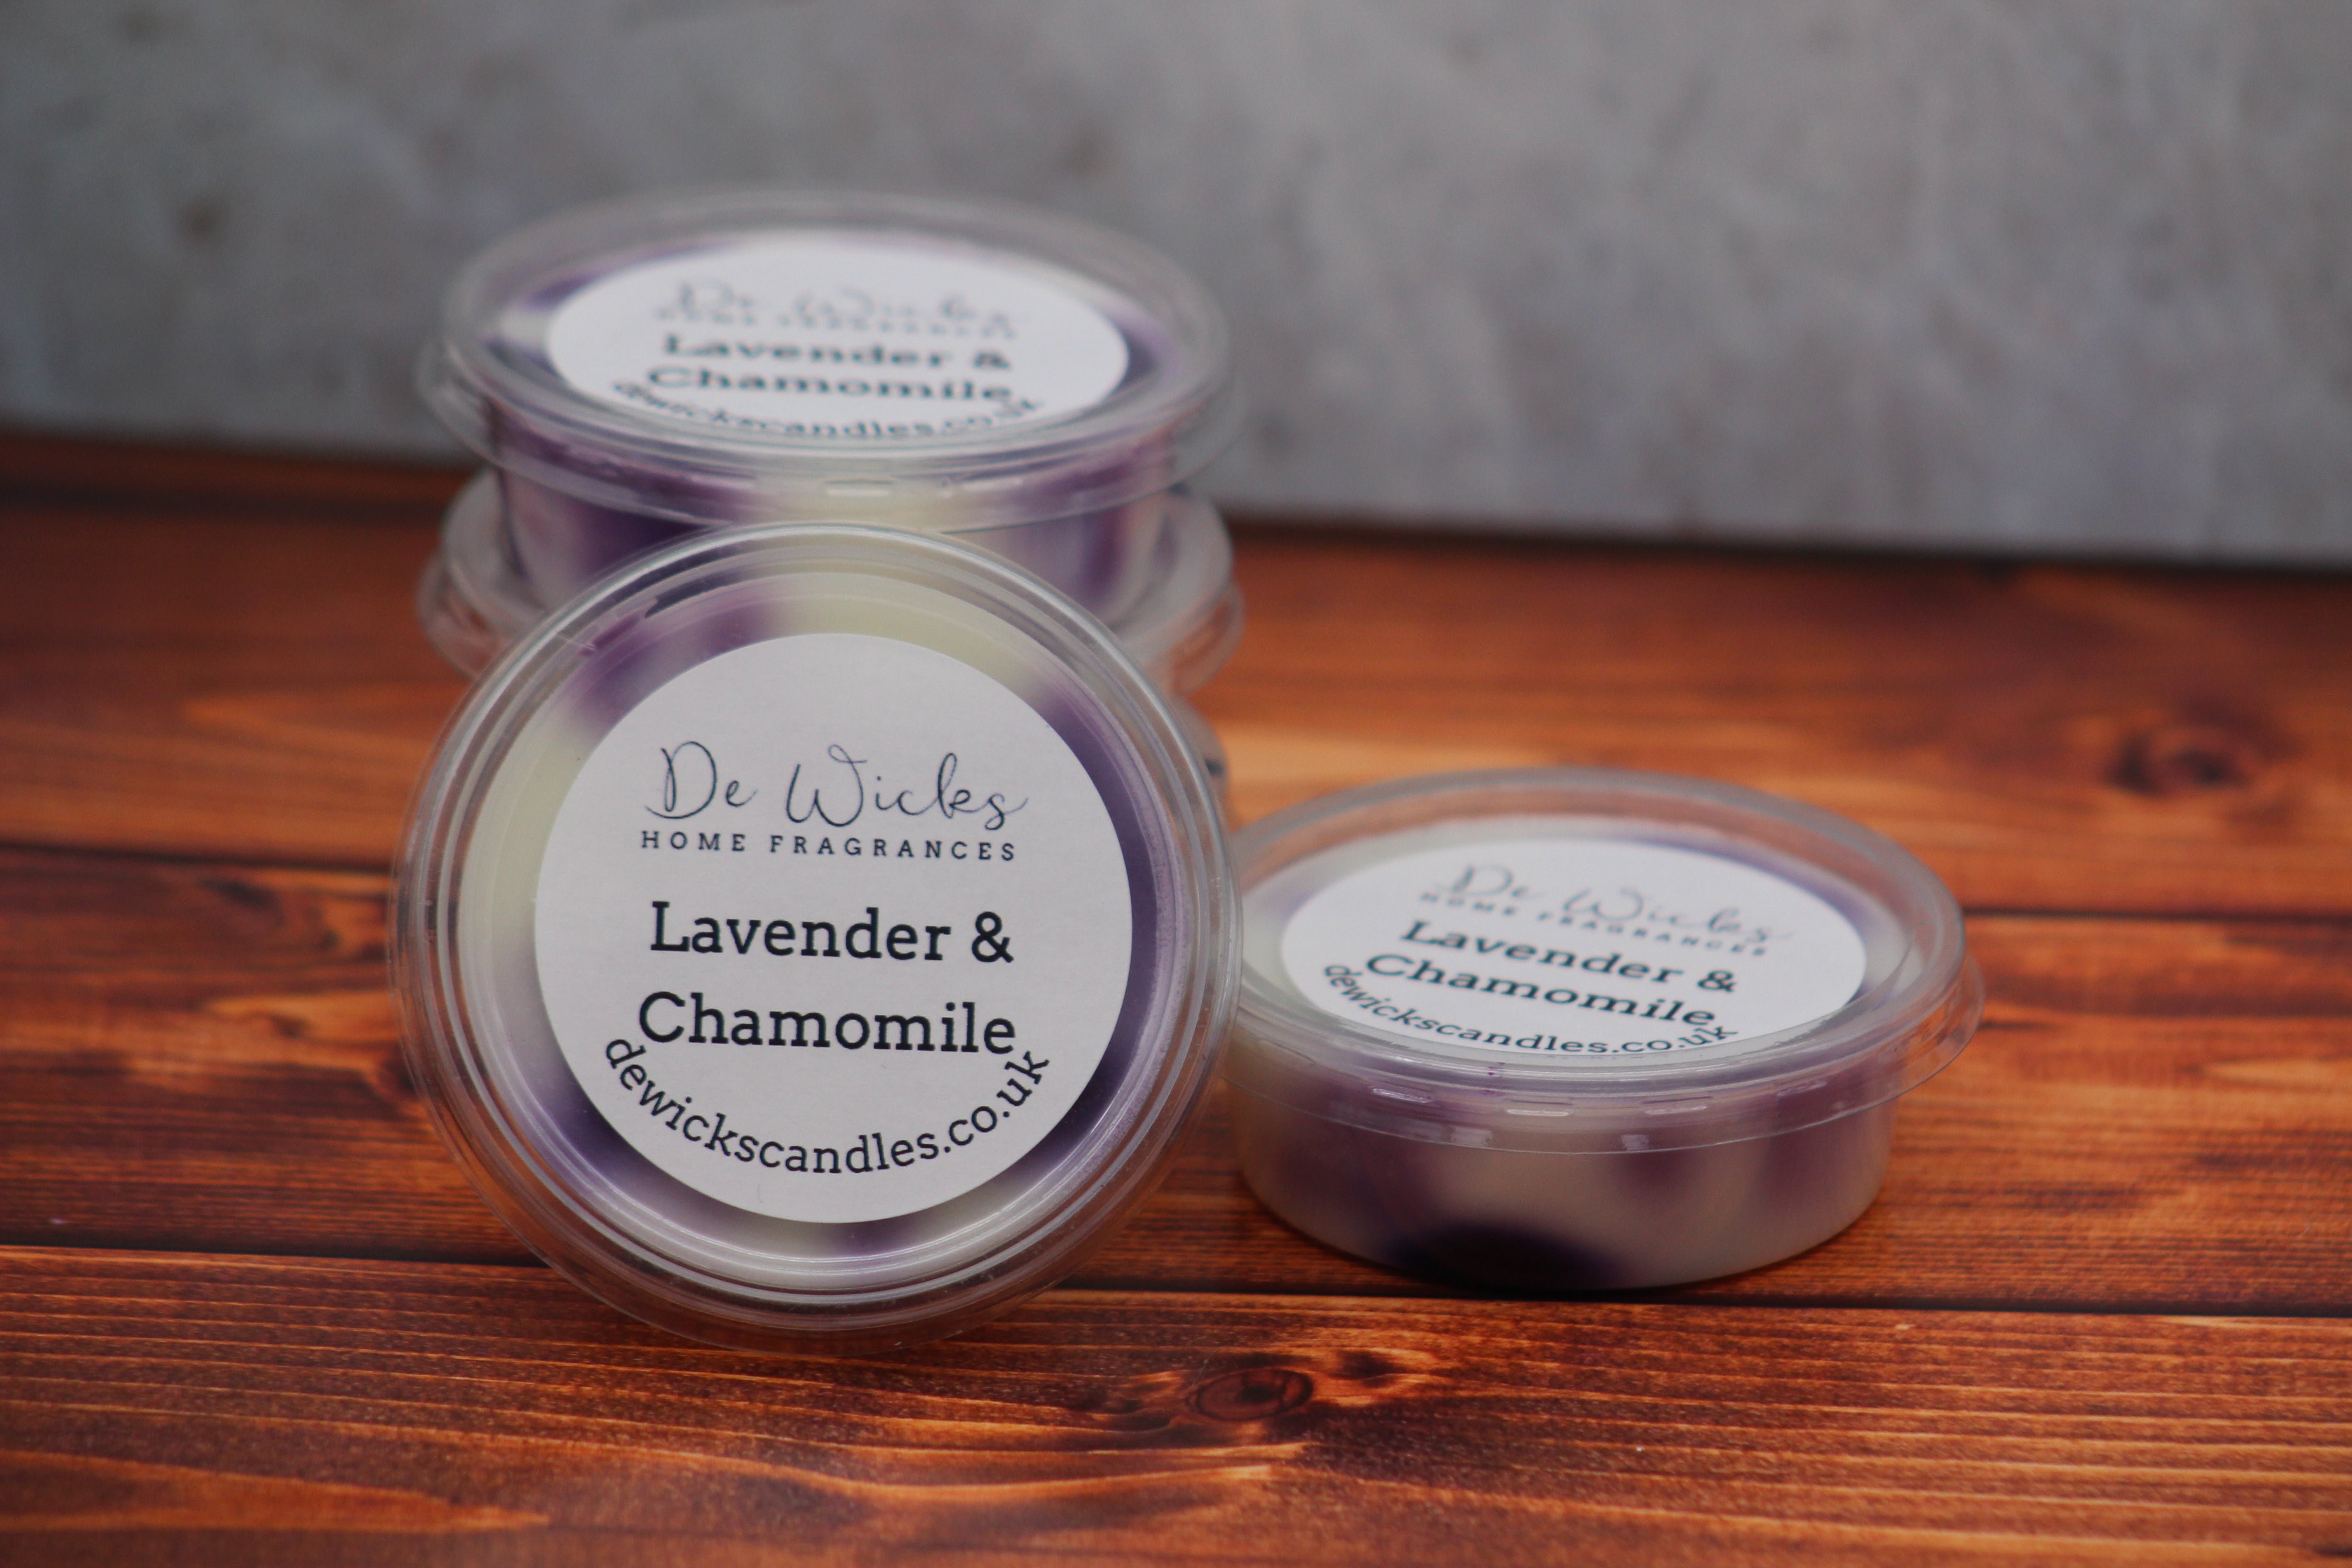 Lavender & Chamomile - De Wicks Home Fragrances